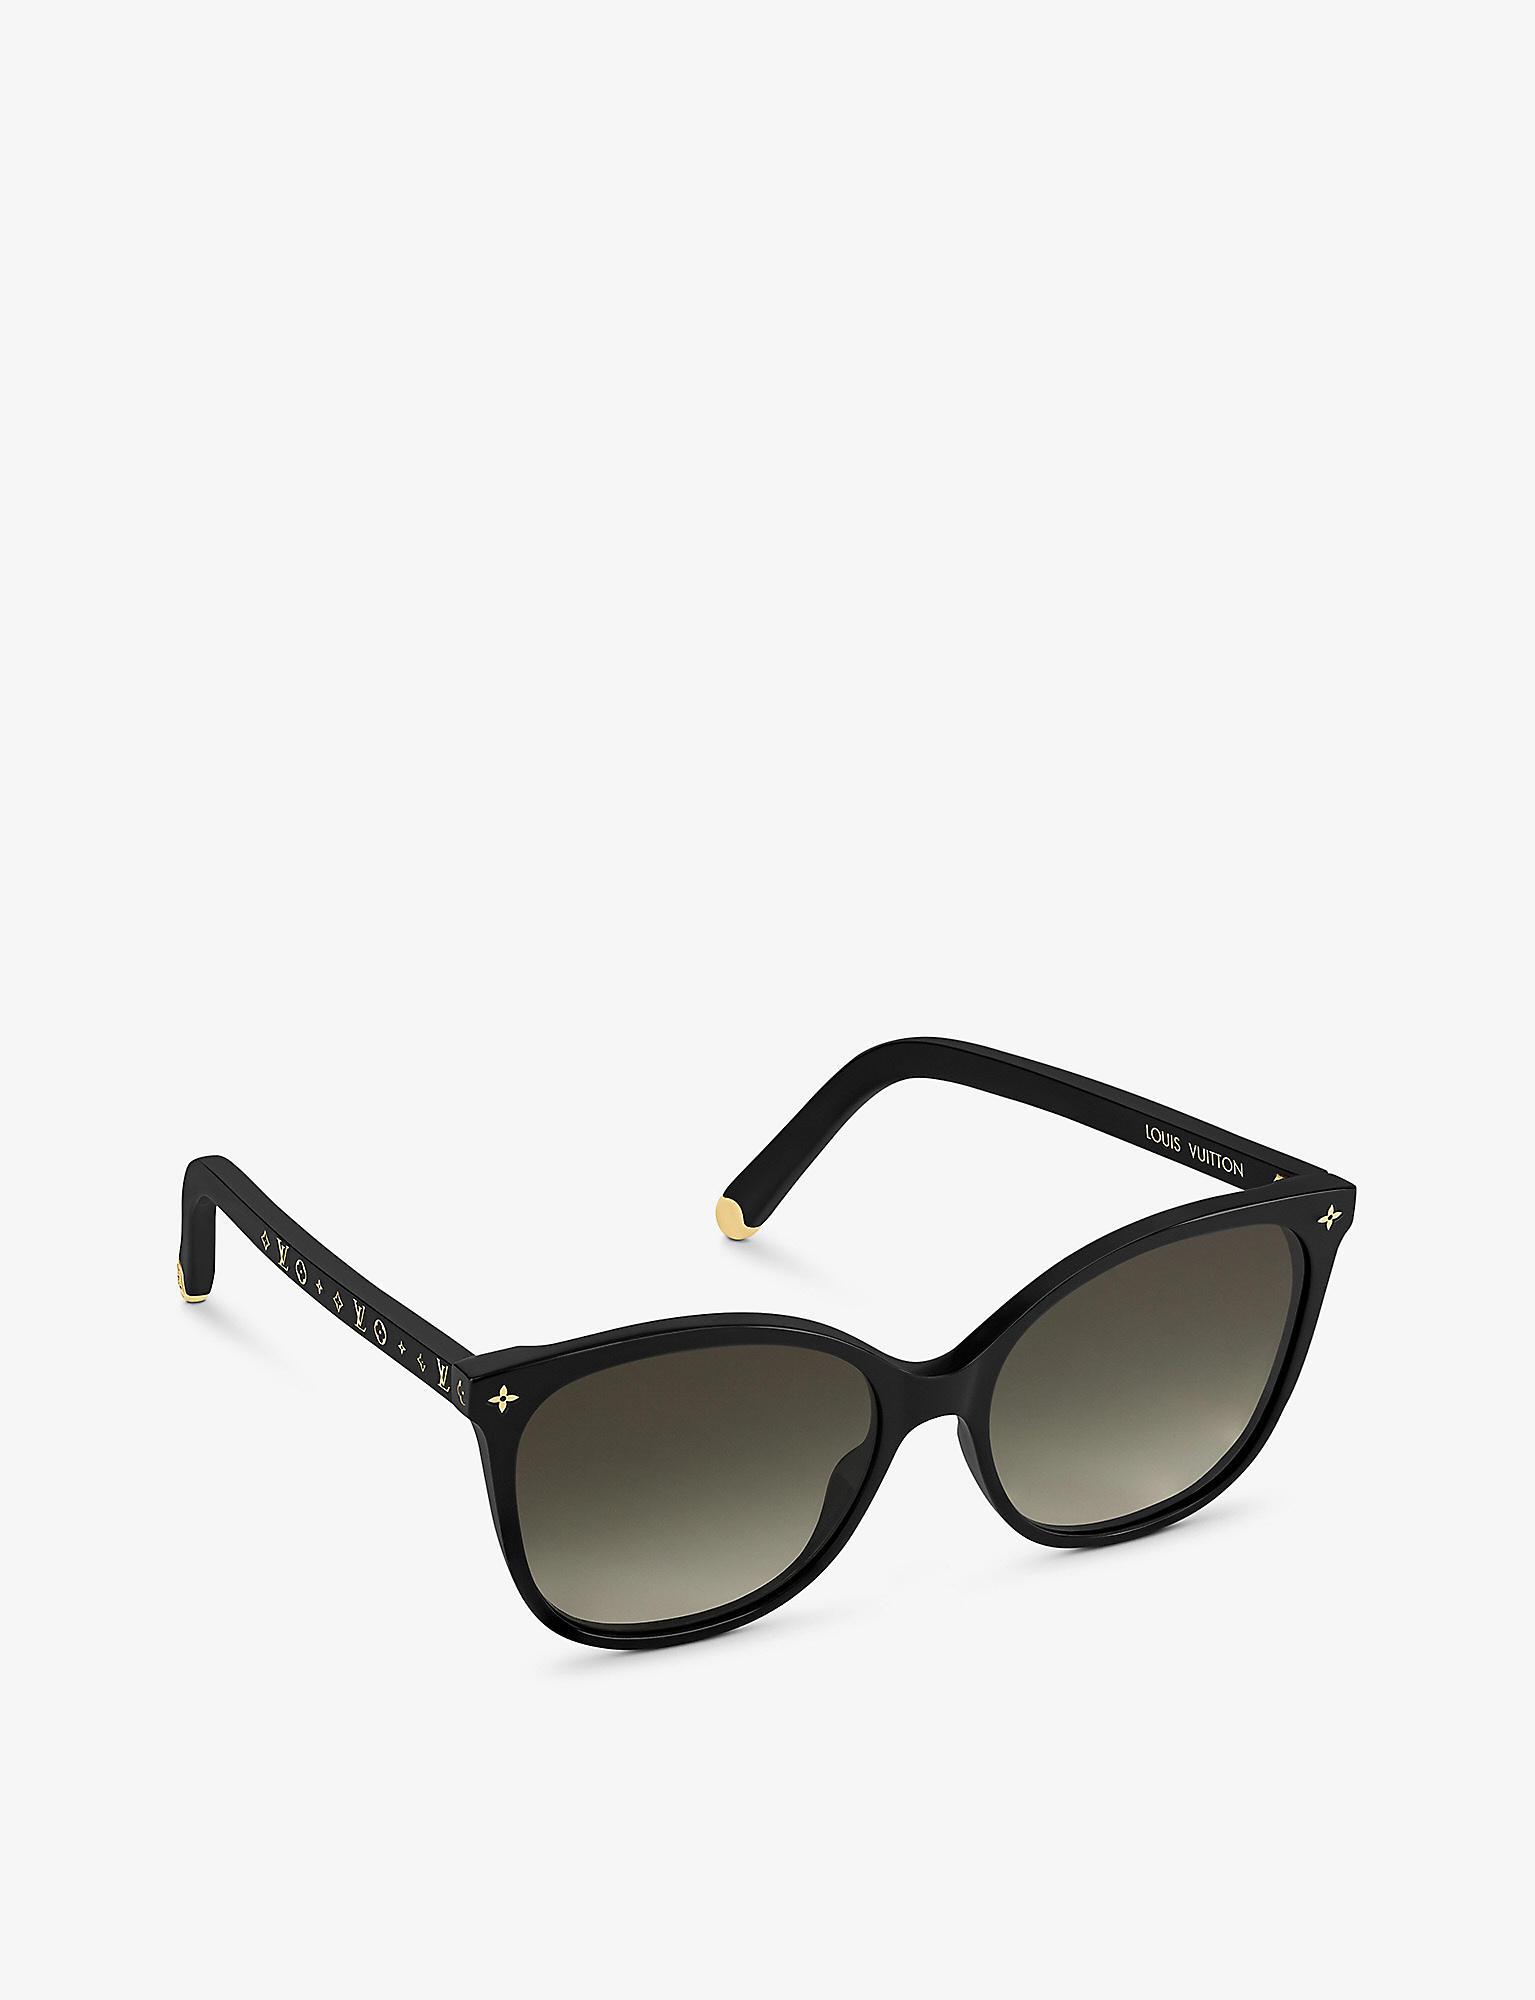 vuitton white sunglasses